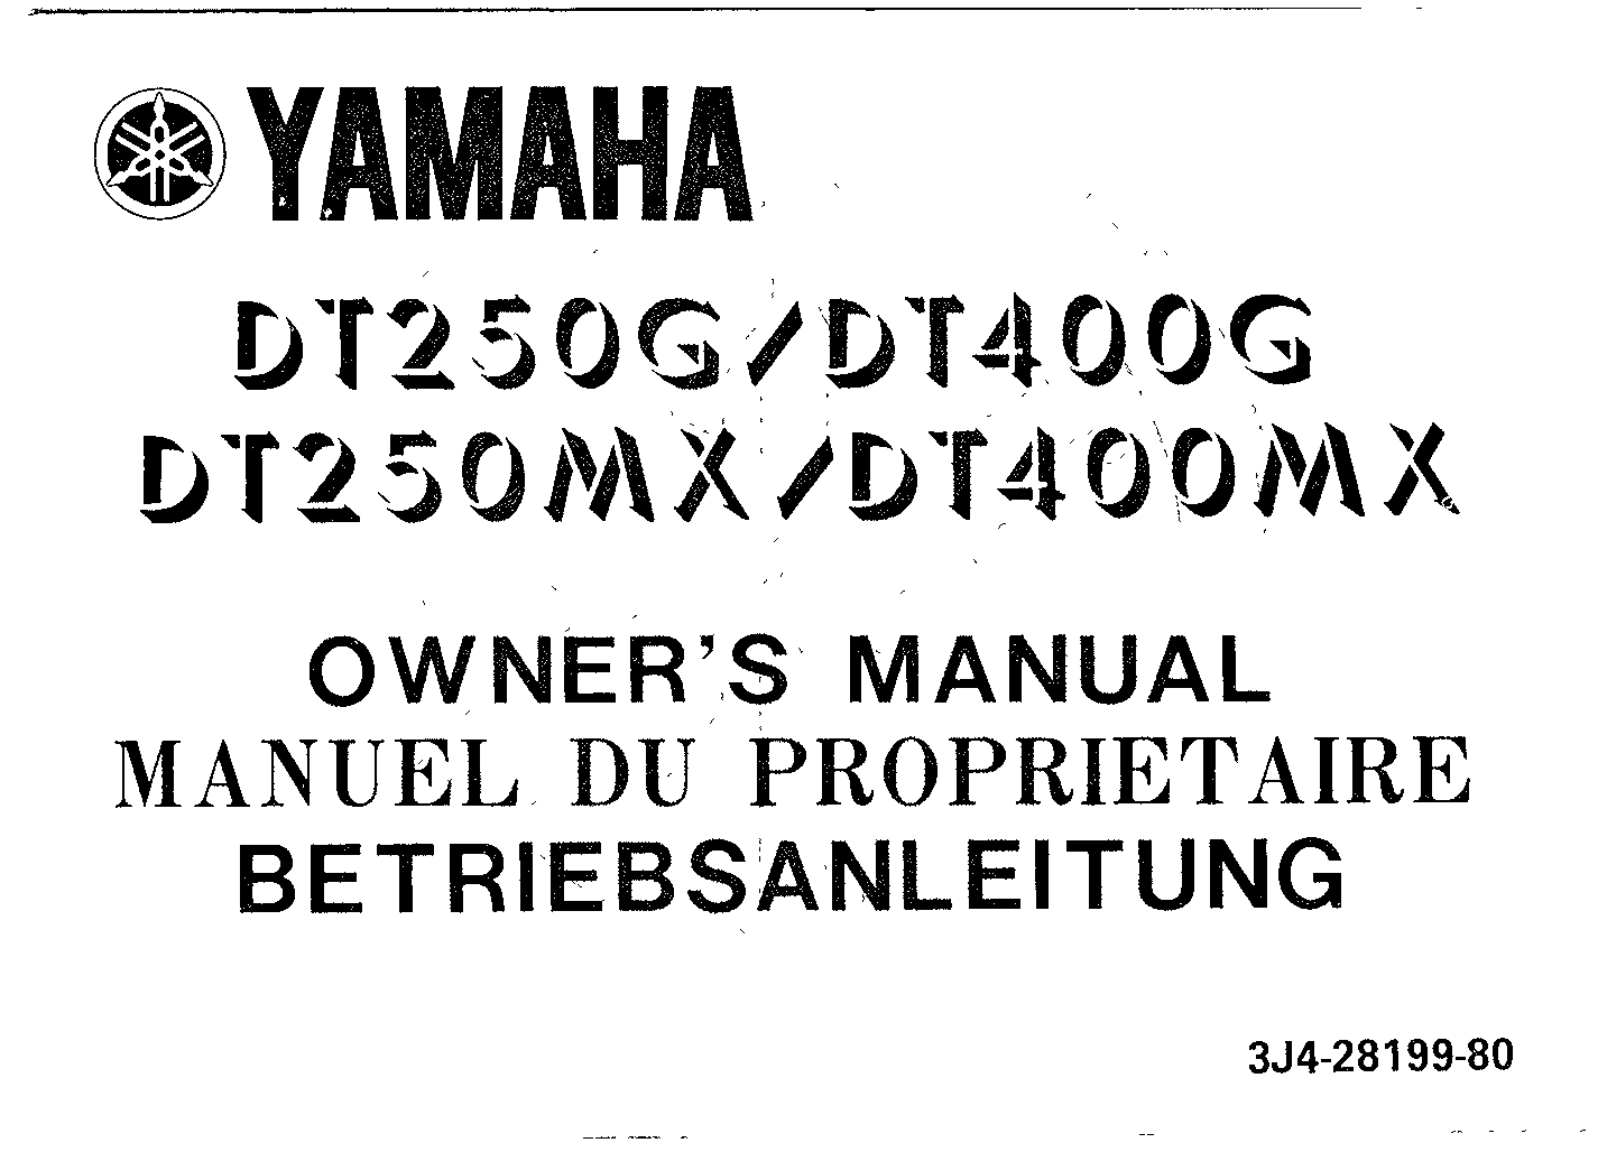 Yamaha DT250G 1980, DT400G 1980, DT250MX 1980, DT400MX 1980 Owner's manual